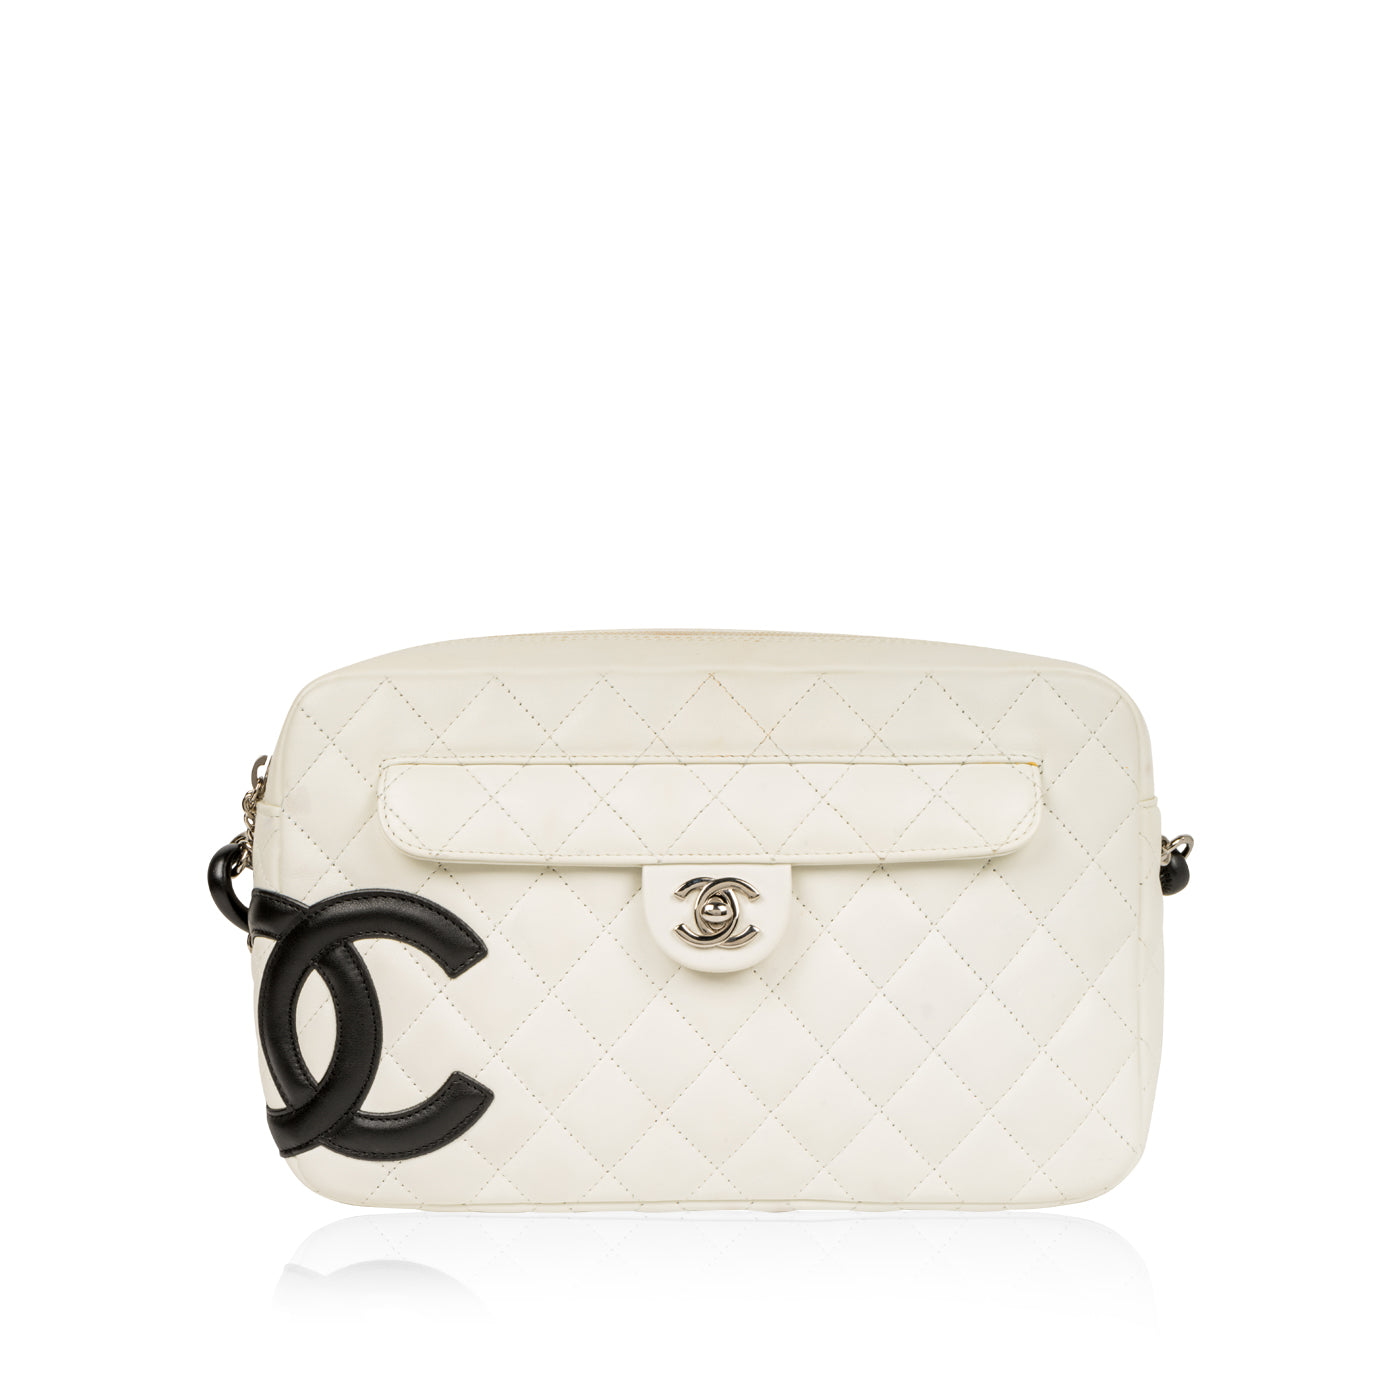 Chanel - Cambon Shoulder Bag - White - Pre-Loved